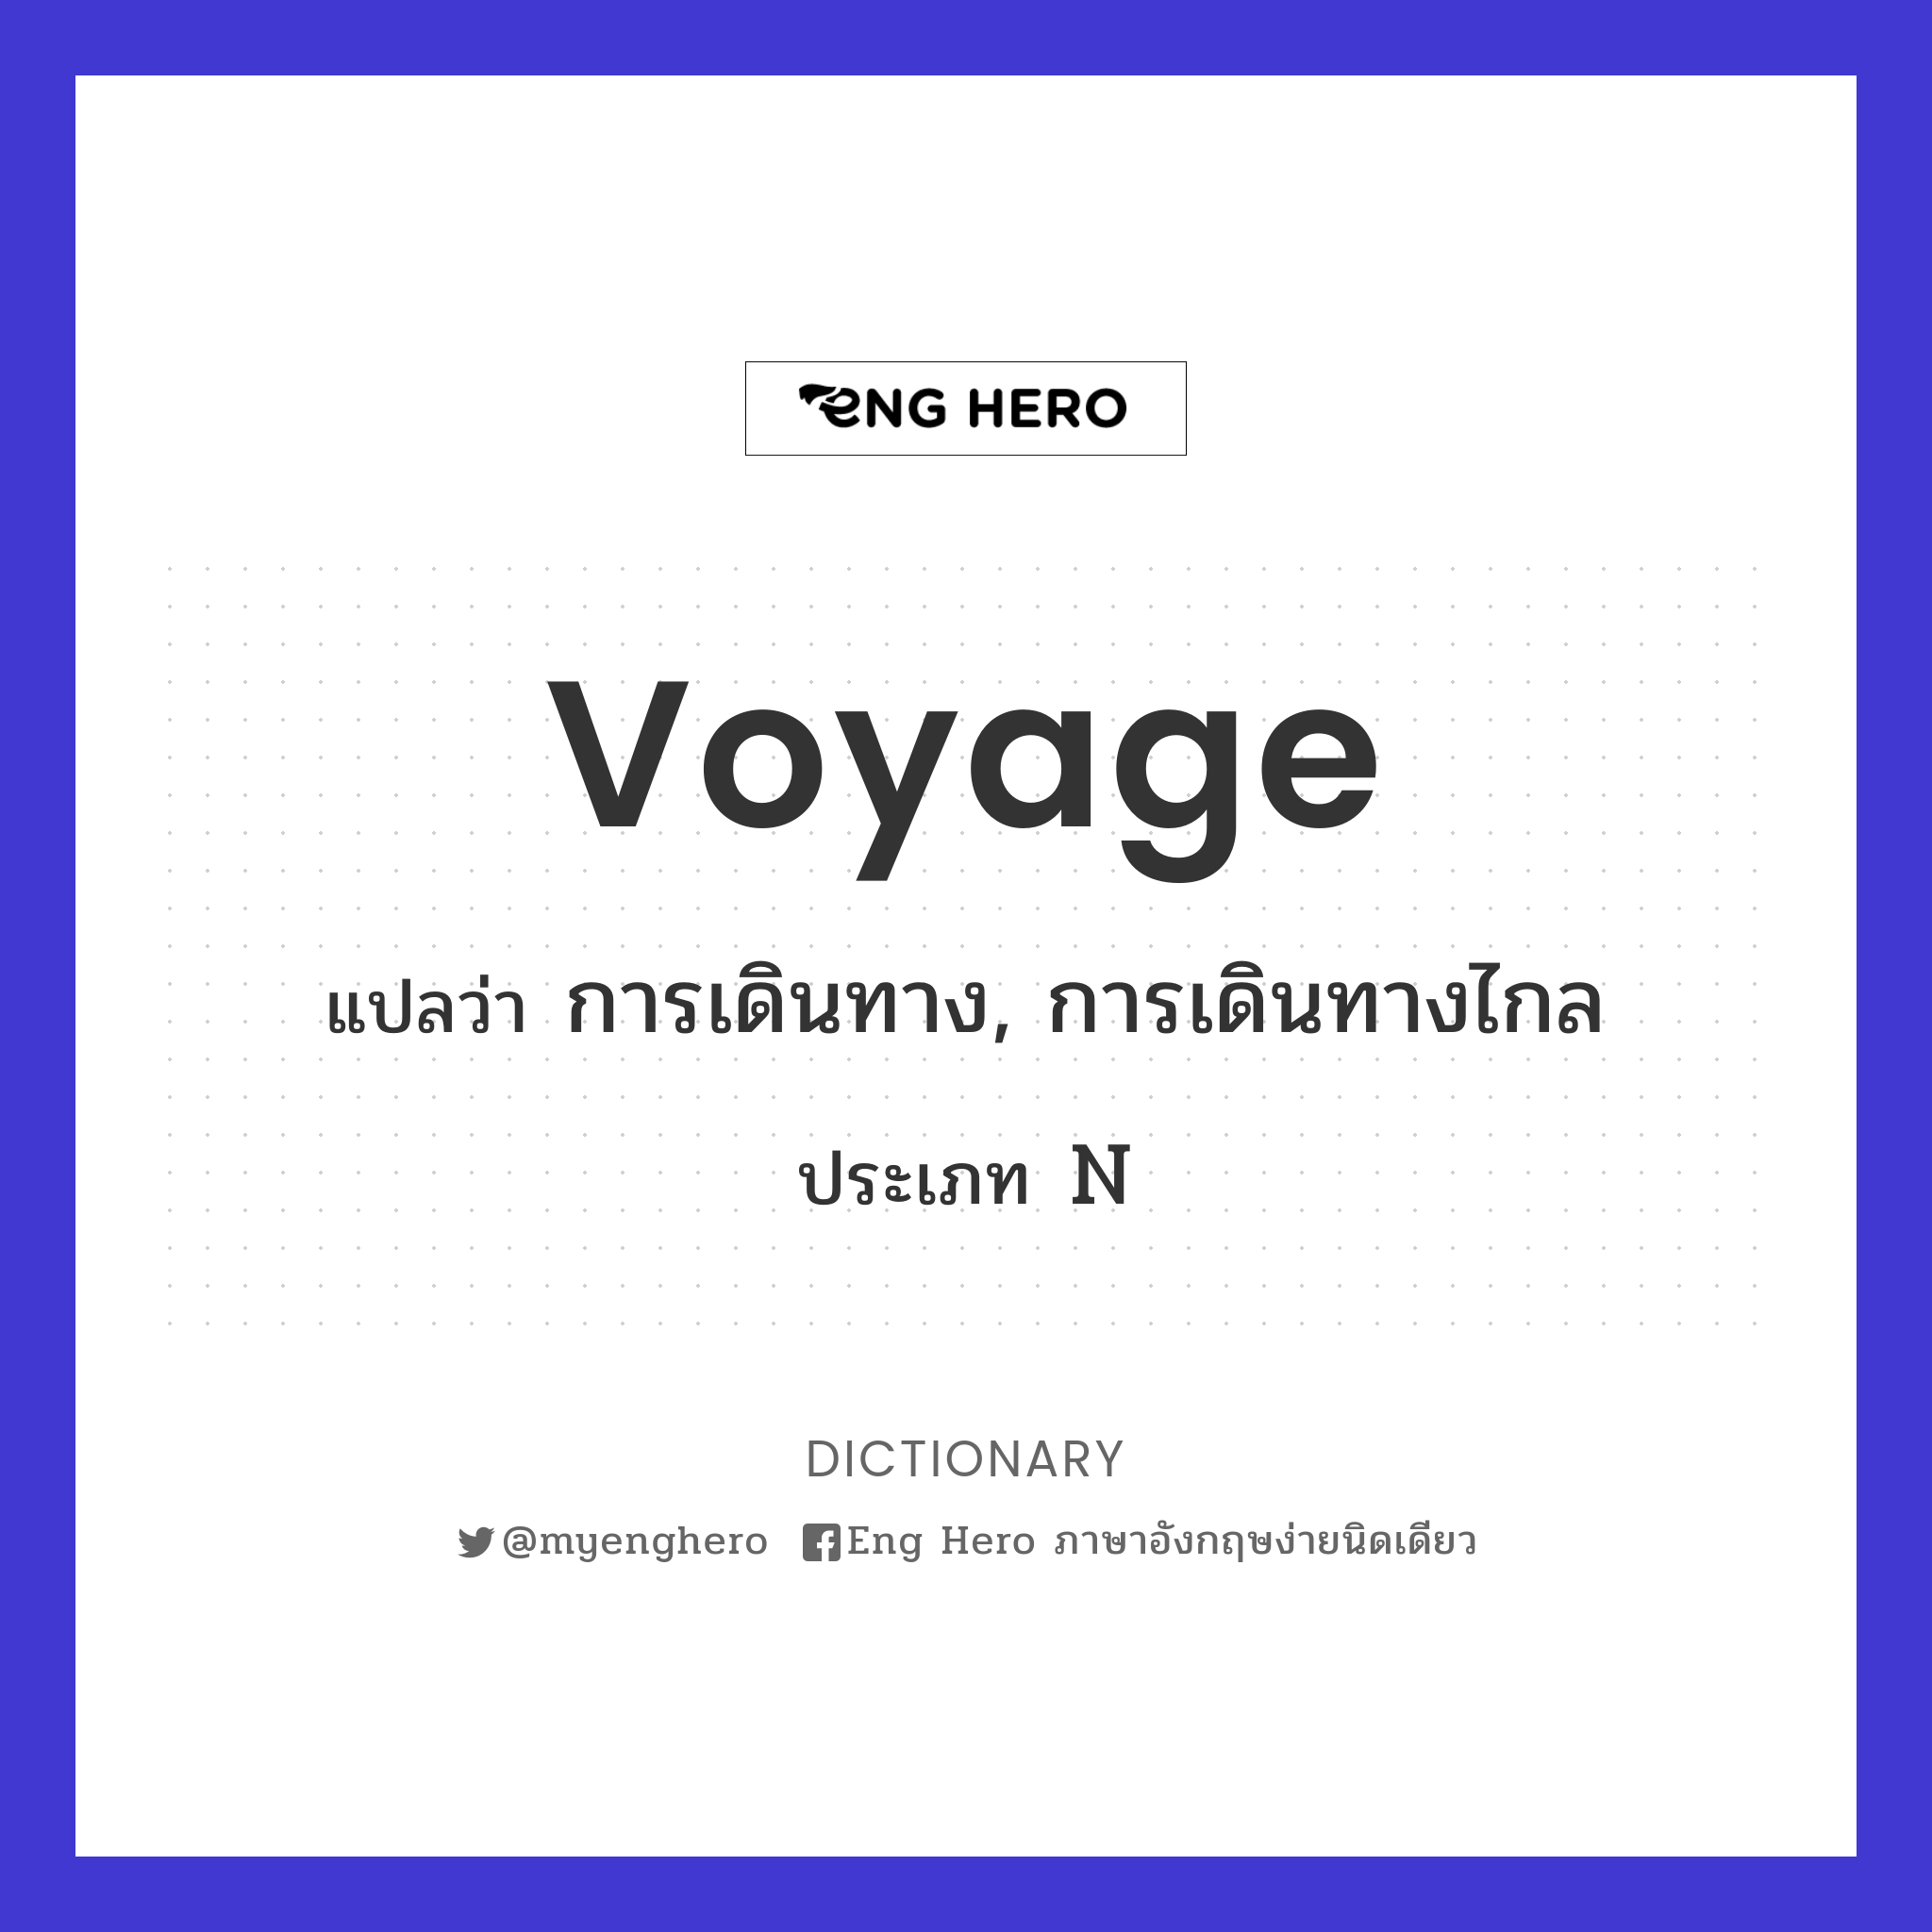 voyage